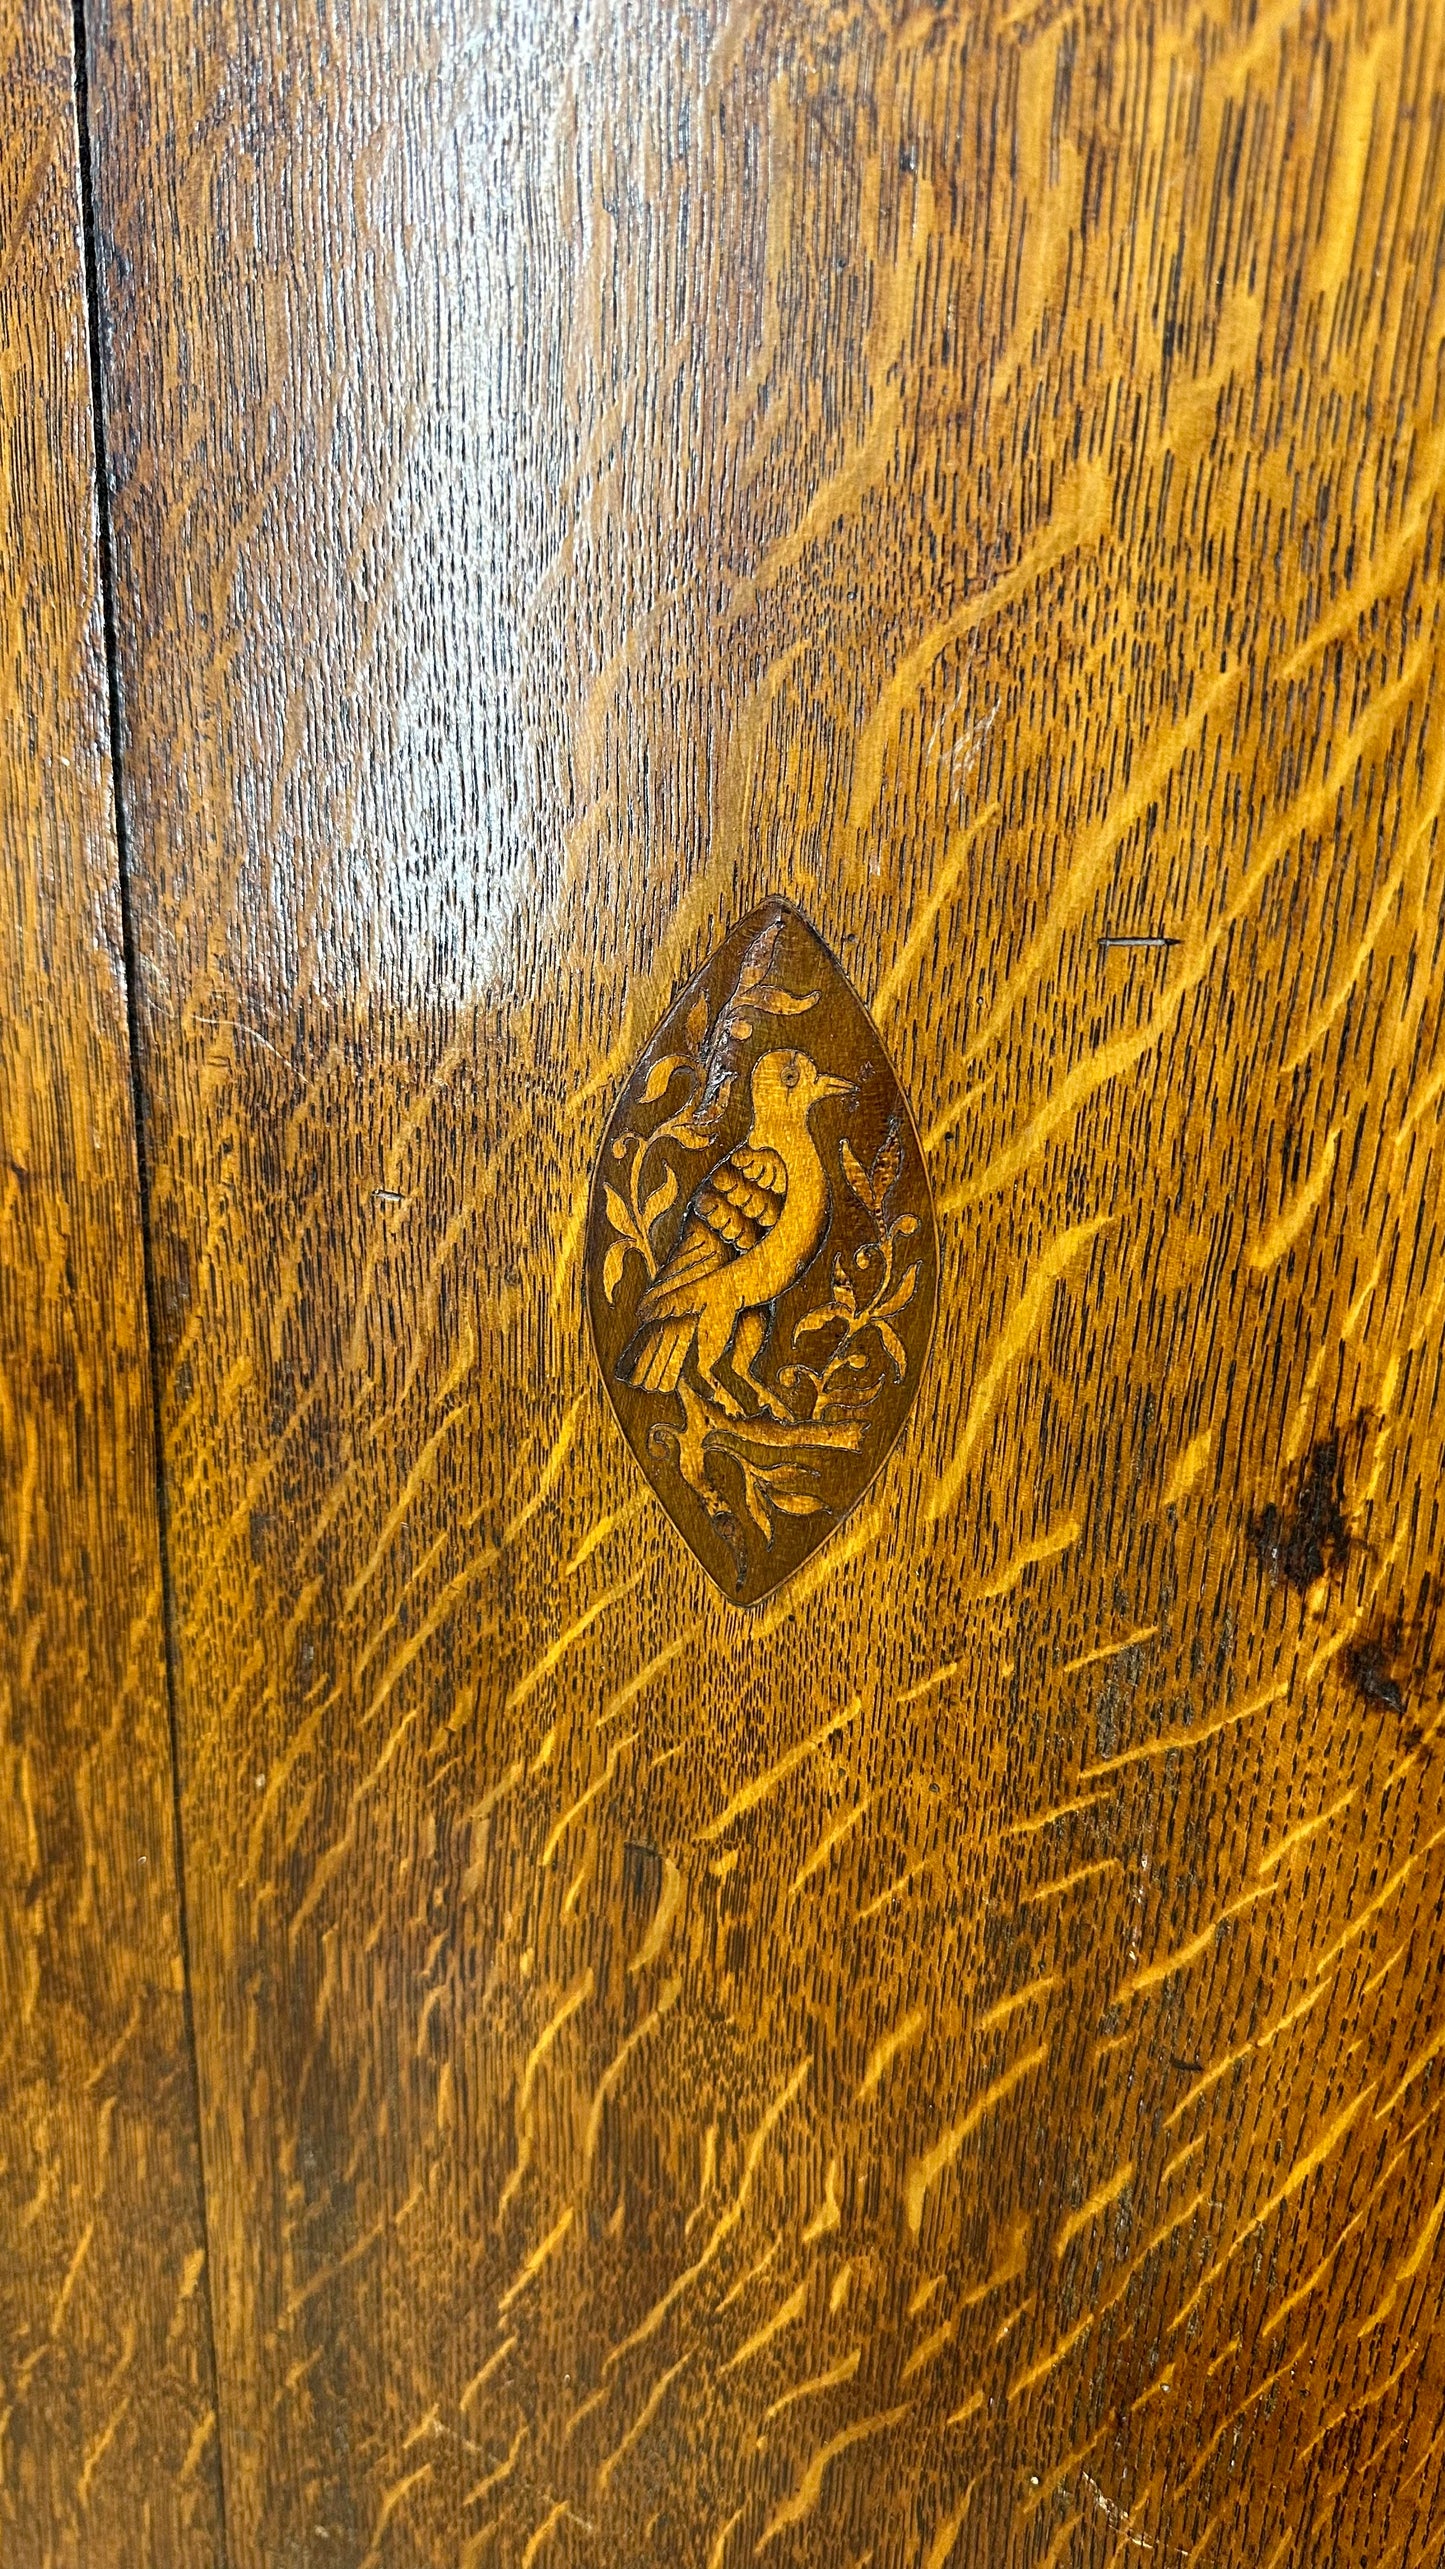 Antique Corner Cupboard / Solid Oak / Georgian Corner Cabinet / George III